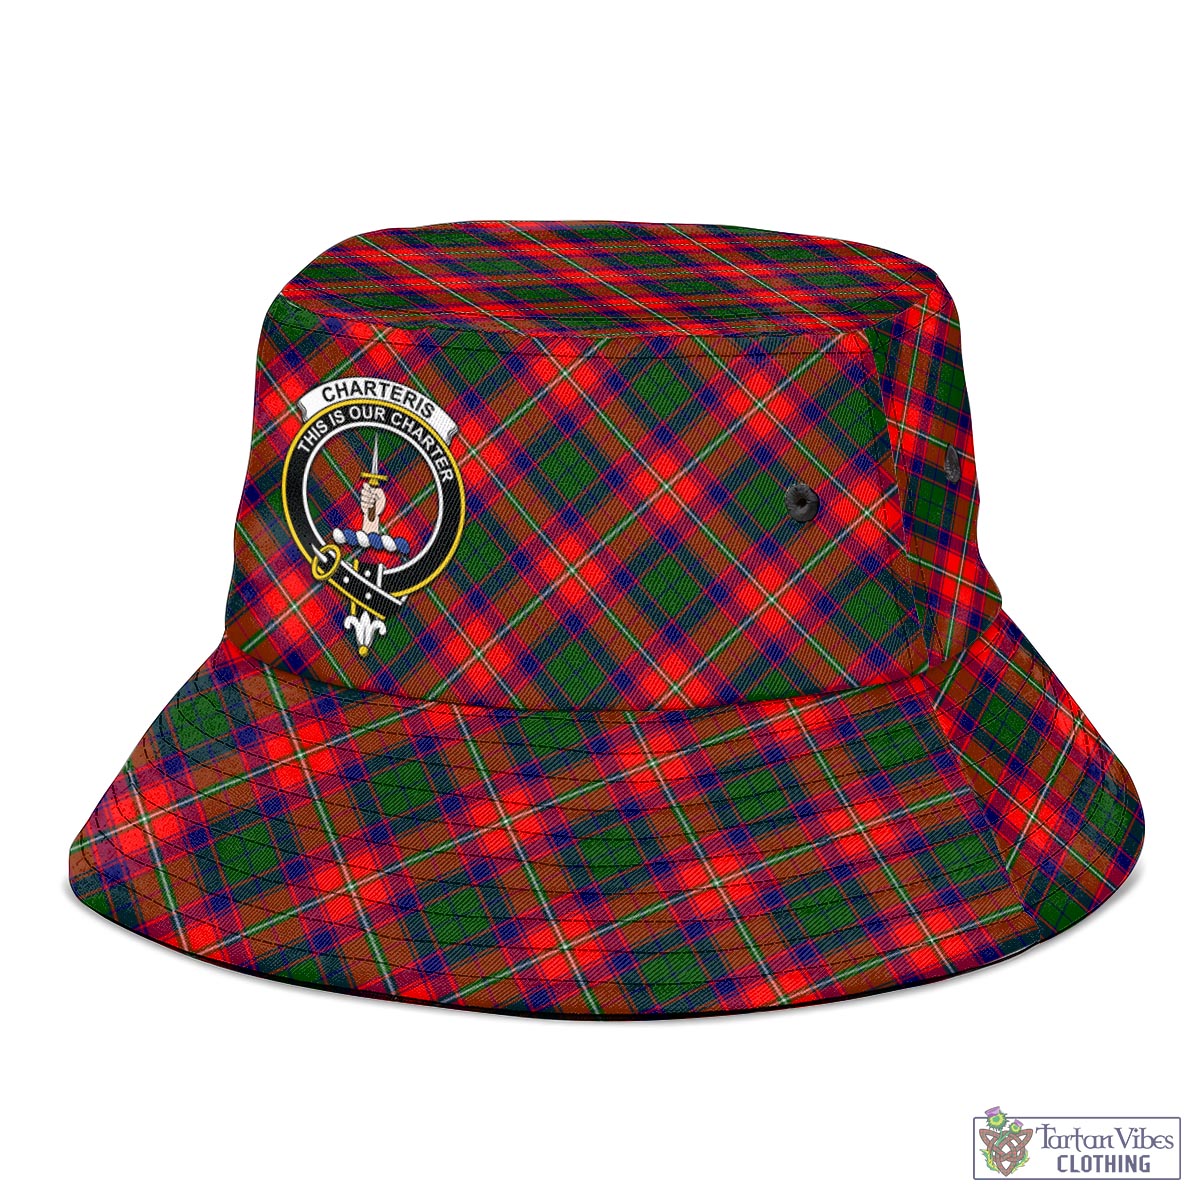 Tartan Vibes Clothing Charteris Tartan Bucket Hat with Family Crest